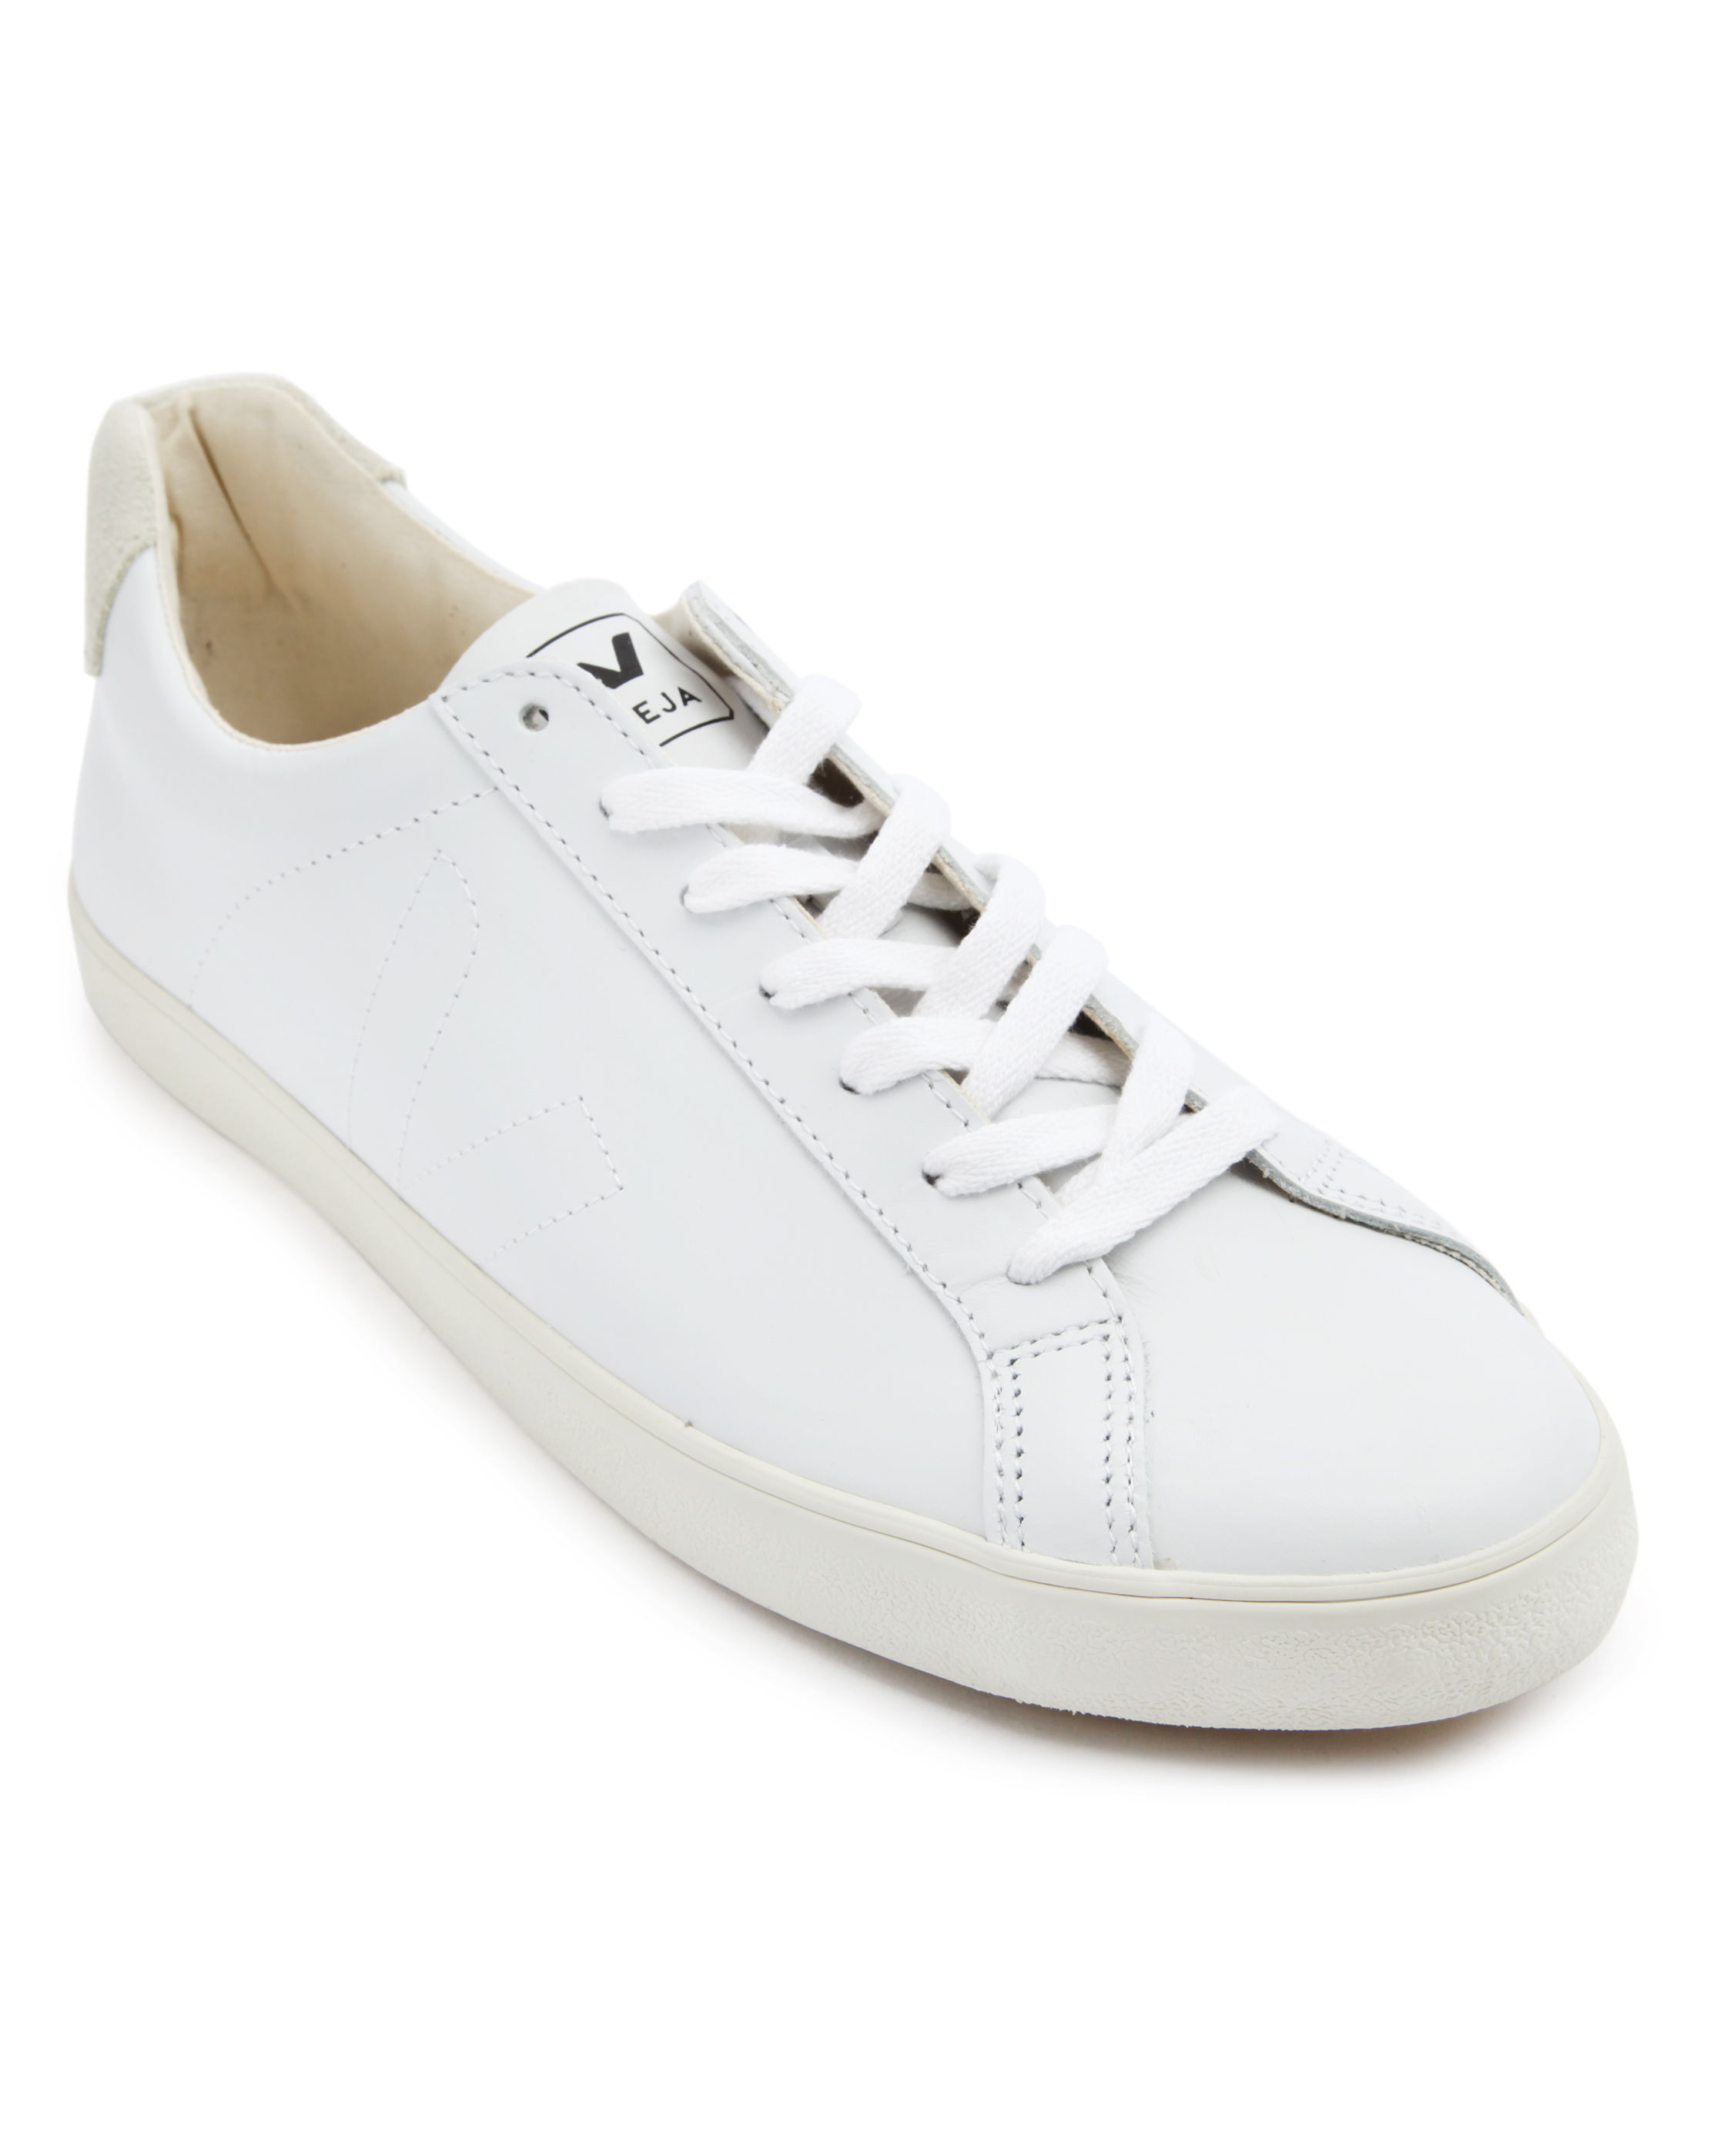 Veja Esplar Cream Leather Sneakers in Beige for Men (cream